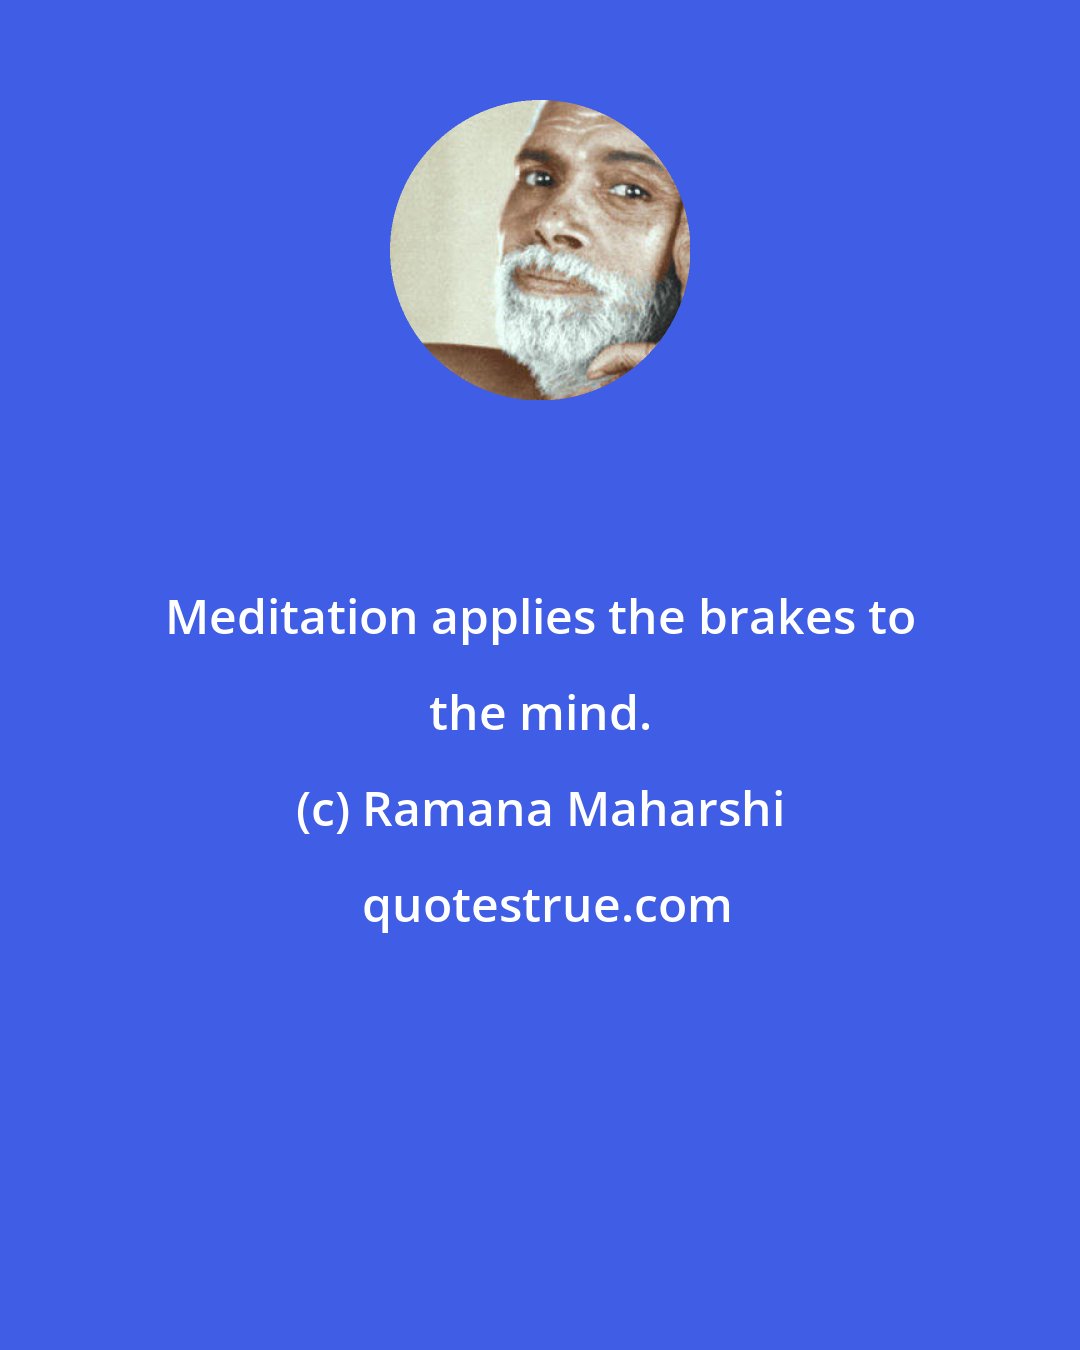 Ramana Maharshi: Meditation applies the brakes to the mind.